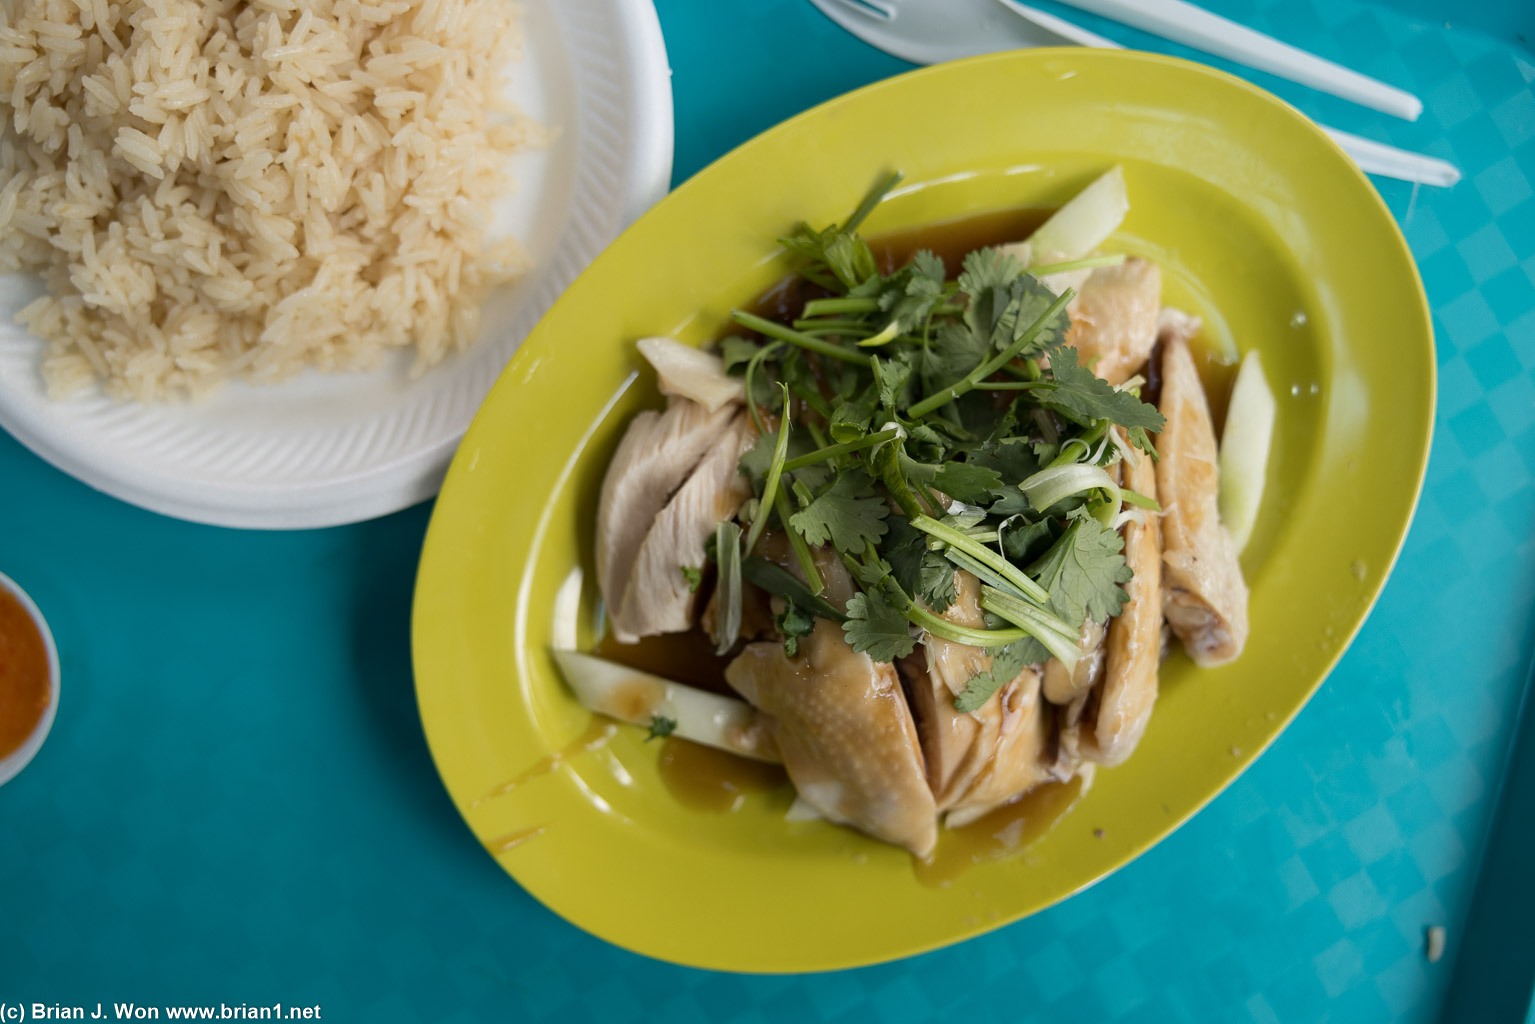 Large size Hainan chicken rice.